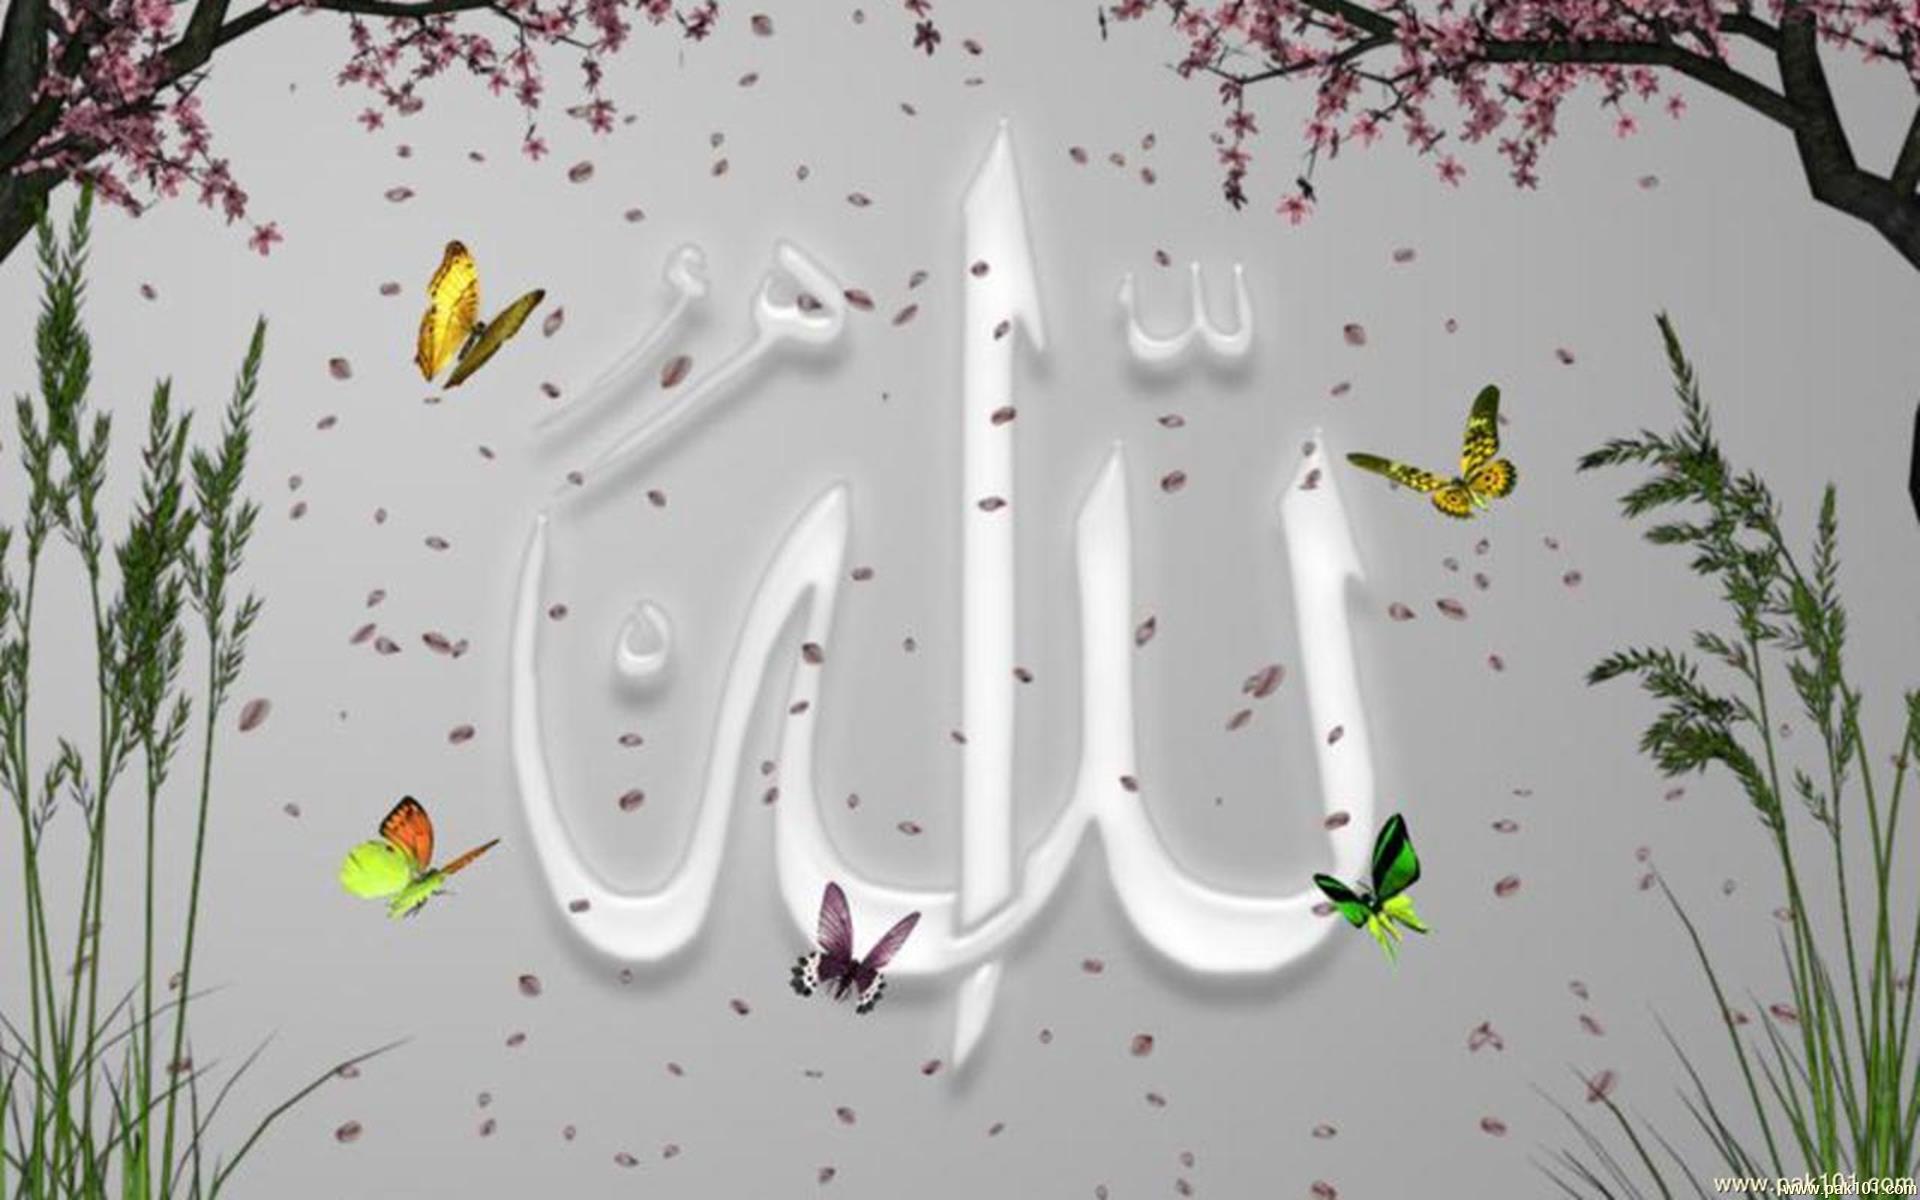 Wallpaper > Islamic > Beautiful Name Allah high quality! Free download 1280x800